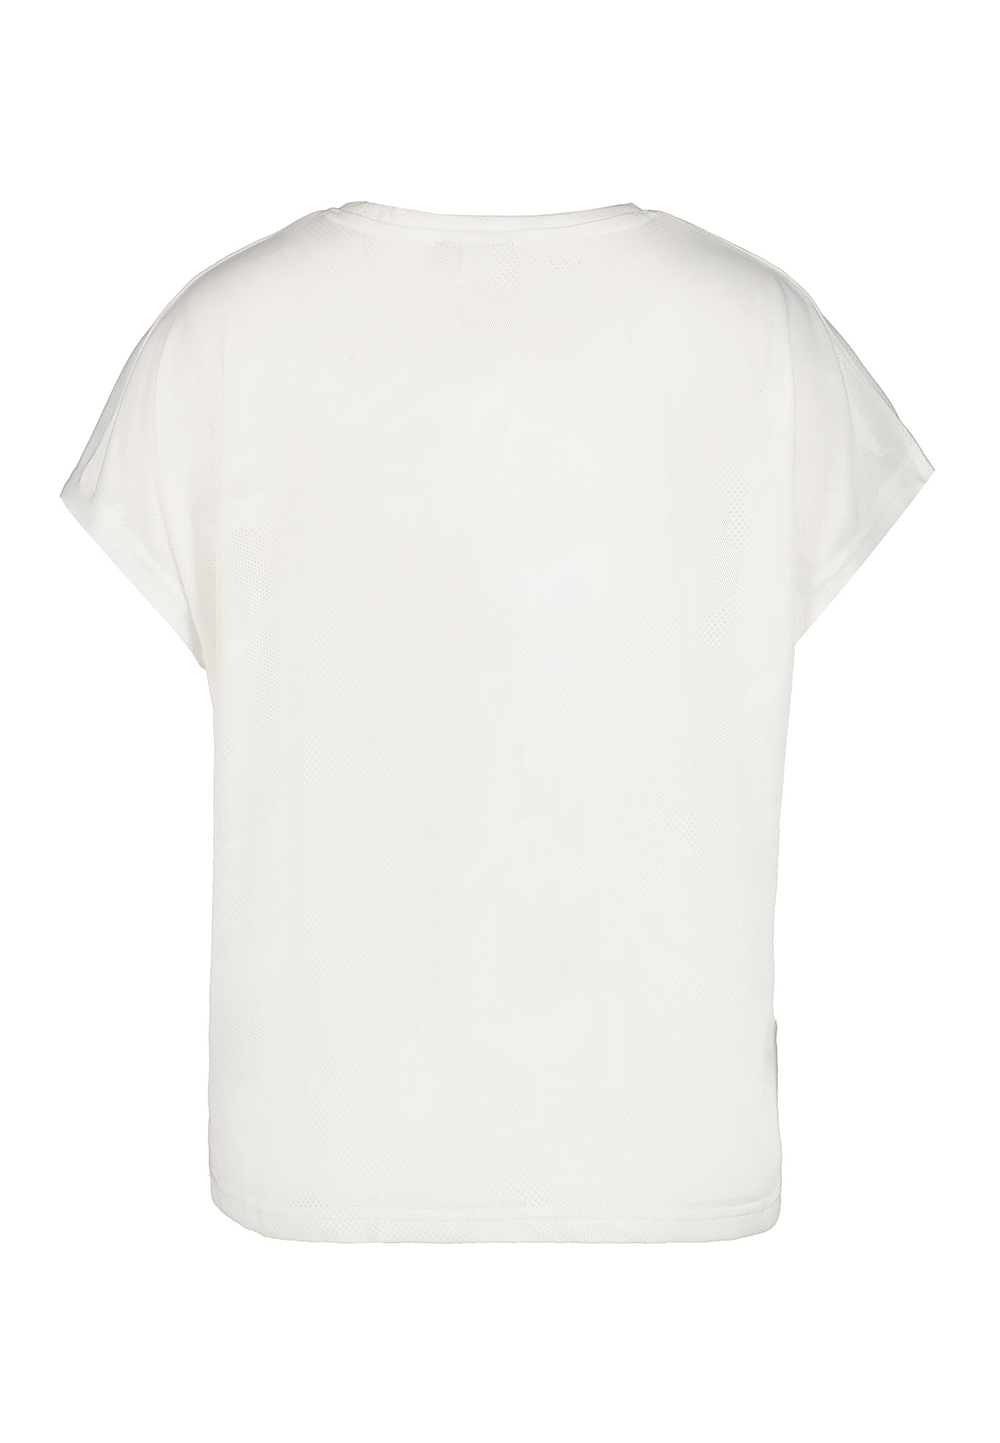 Lutha Damen Hiukkajoki T-Shirt 35208 weiß